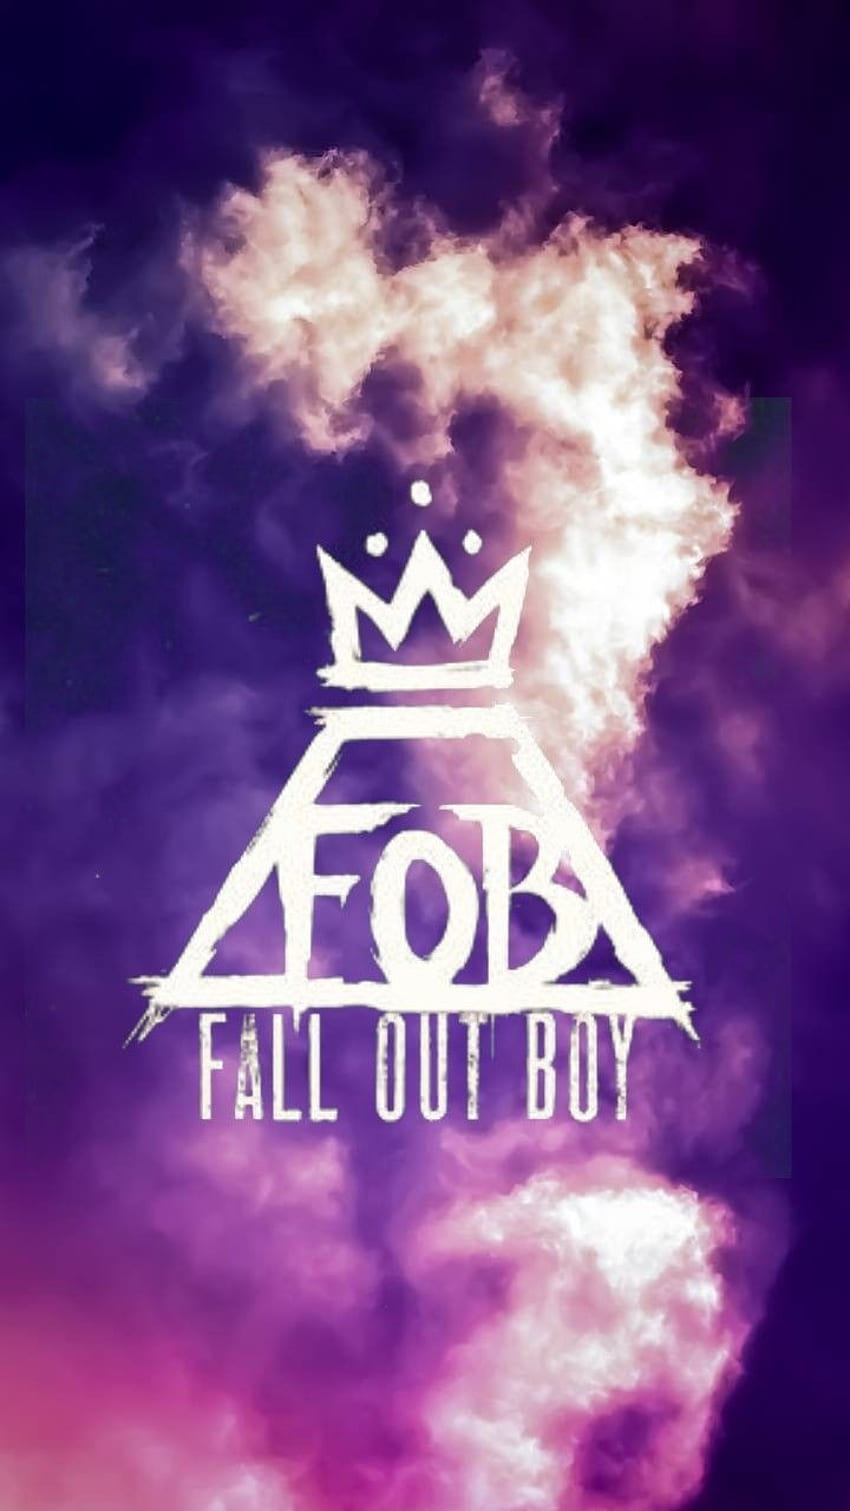 Grup band Fall Out Boy. Fall out boy, Fall out boy , Boys, Red Band Society wallpaper ponsel HD